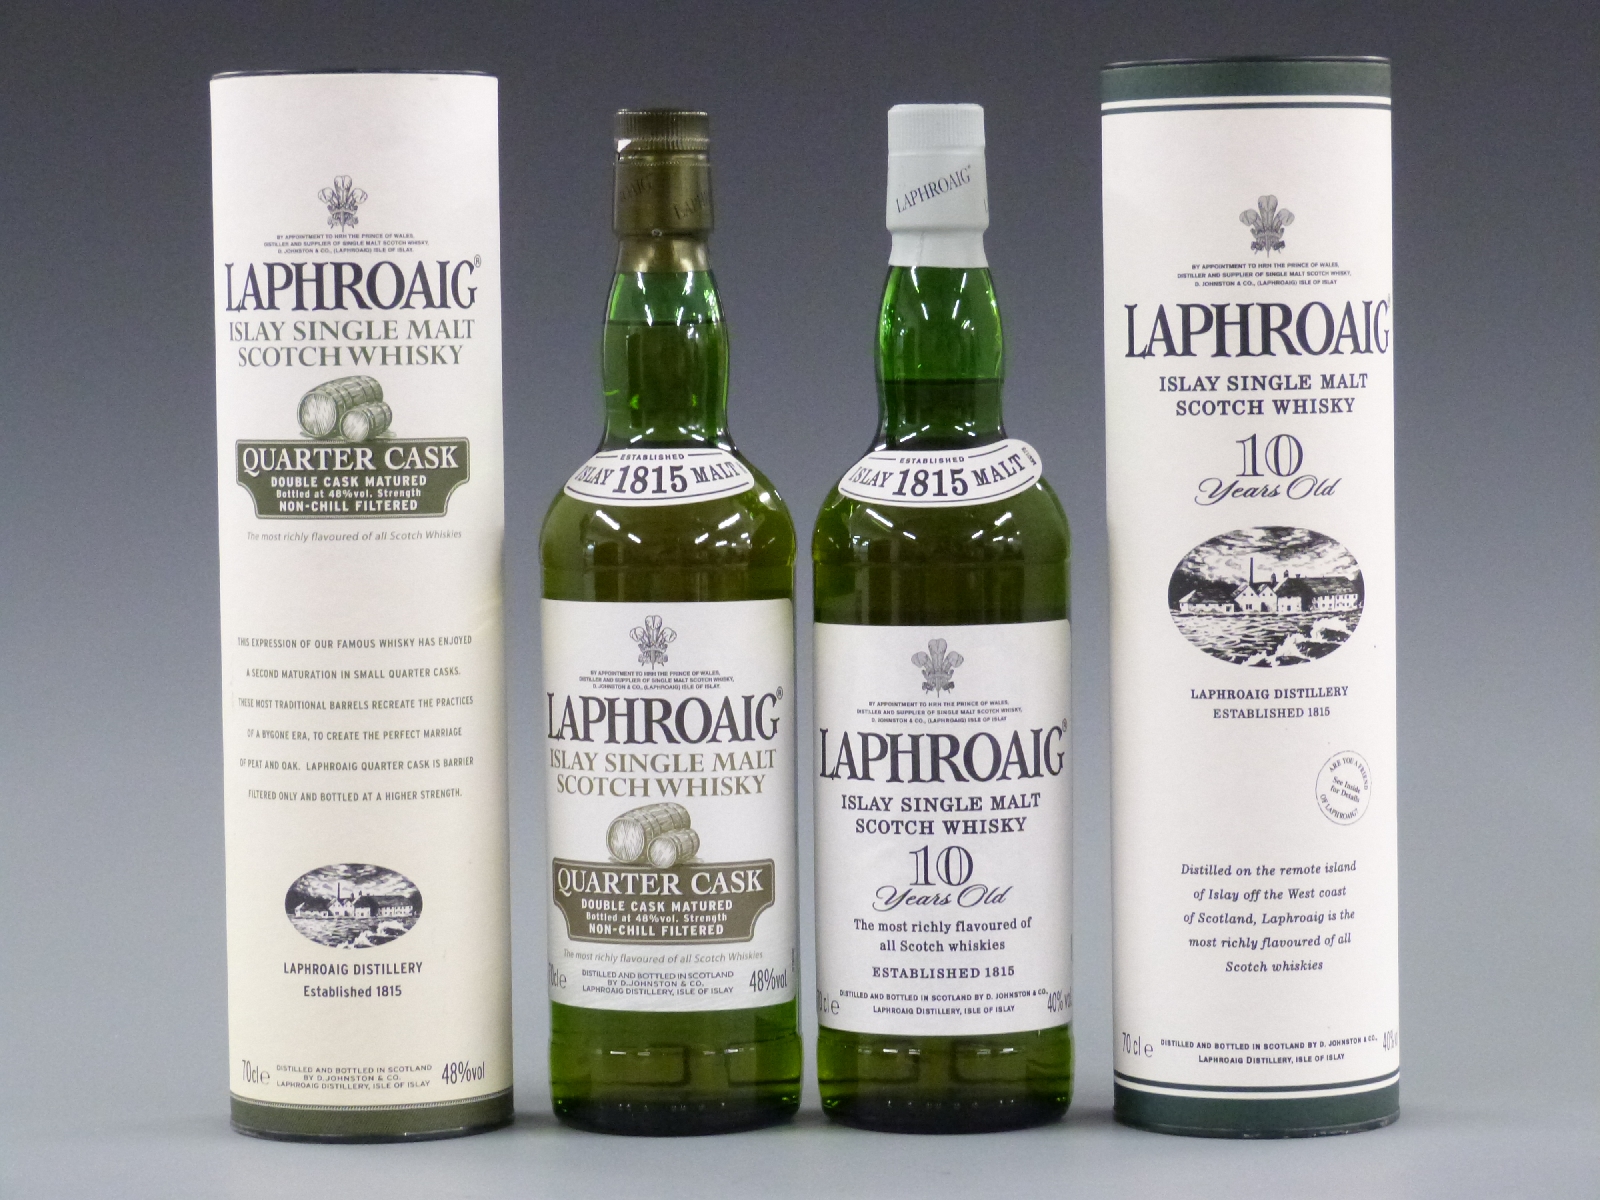 Laphroaig Quarter Cask, double cask matured non-chill filtered, Islay Single Malt Scotch Whisky,